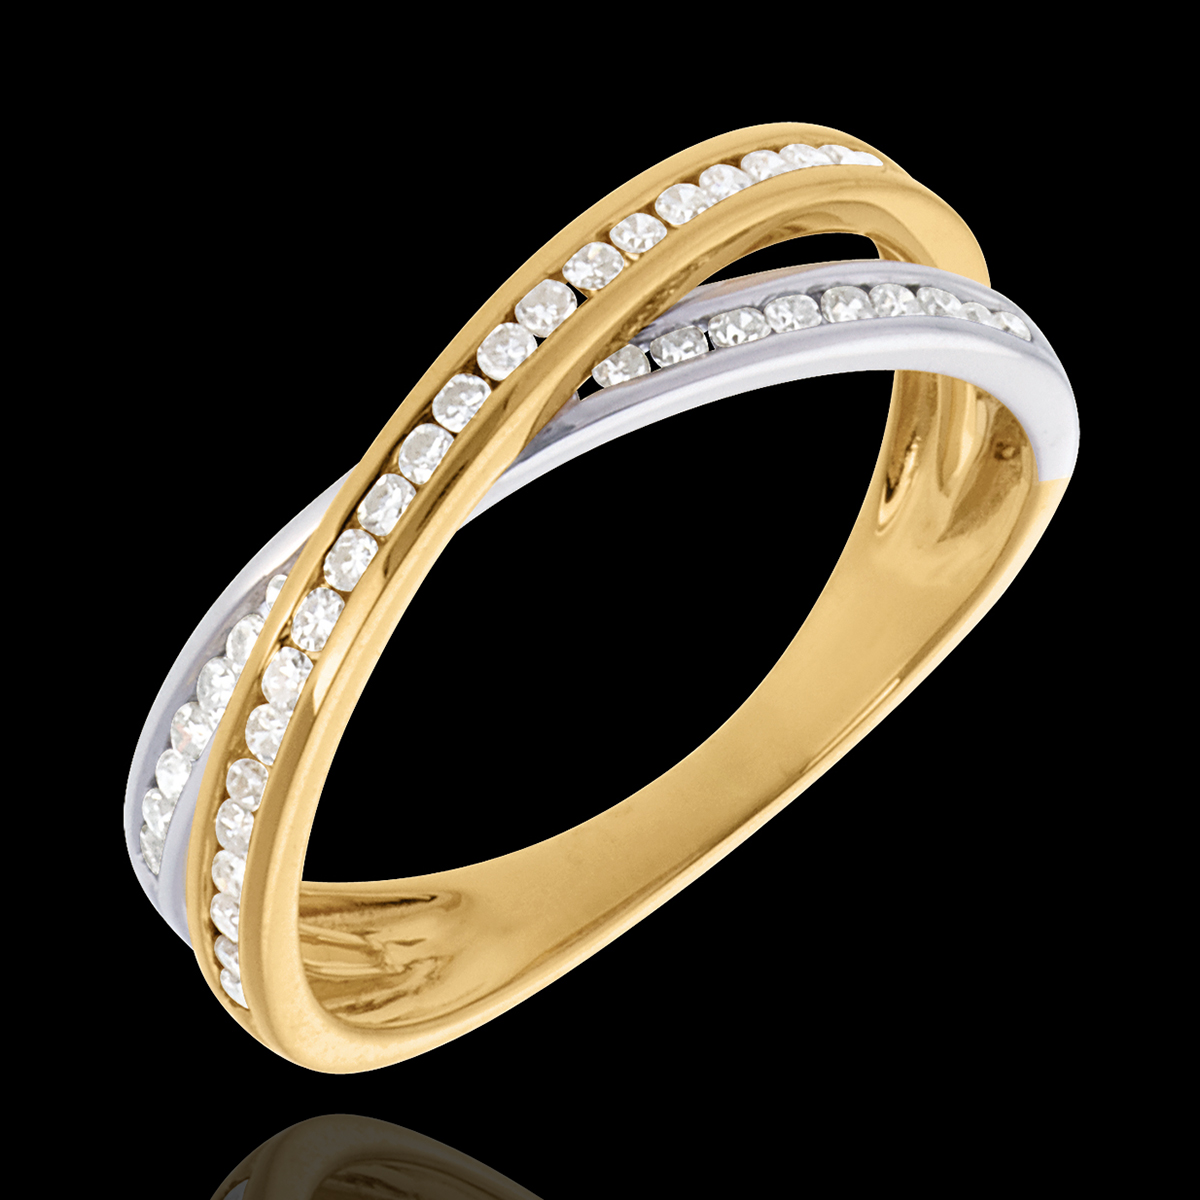 Tandem ring paved - 0.26 carat - 43diamonds : Edenly jewelery